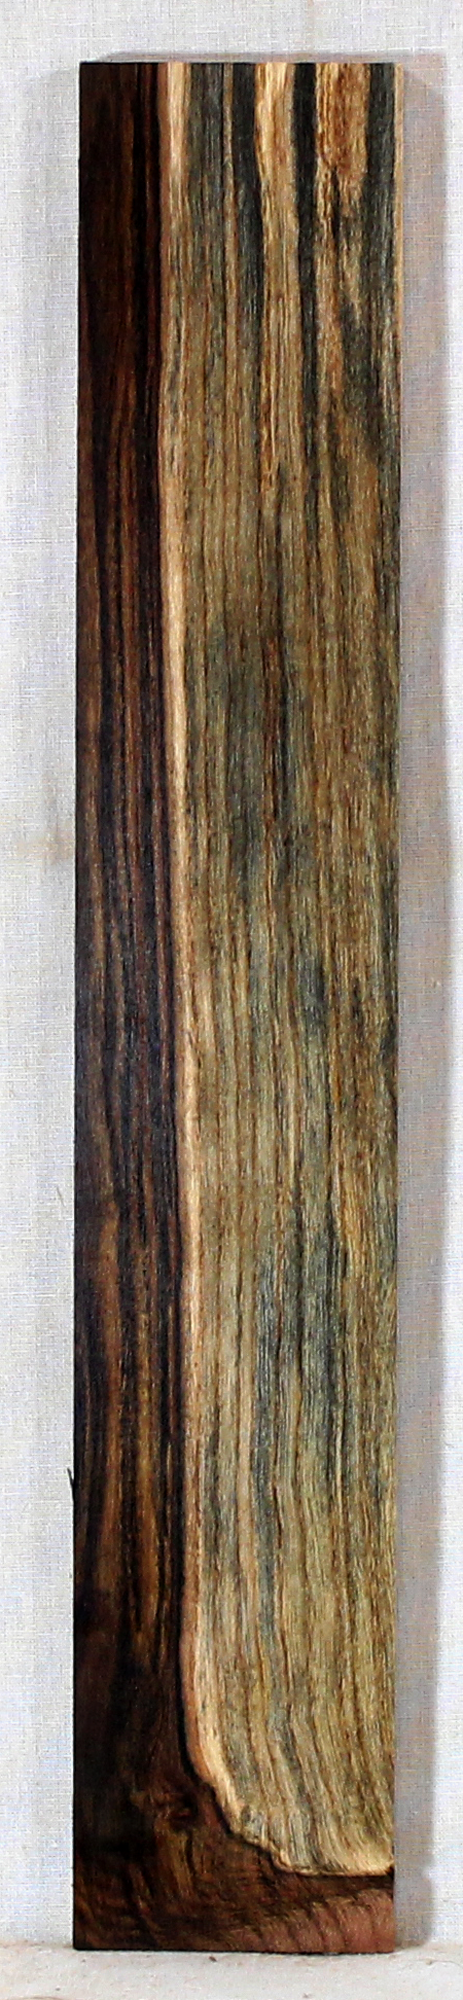 Pistachio Ukulele Fingerboard (EF91)